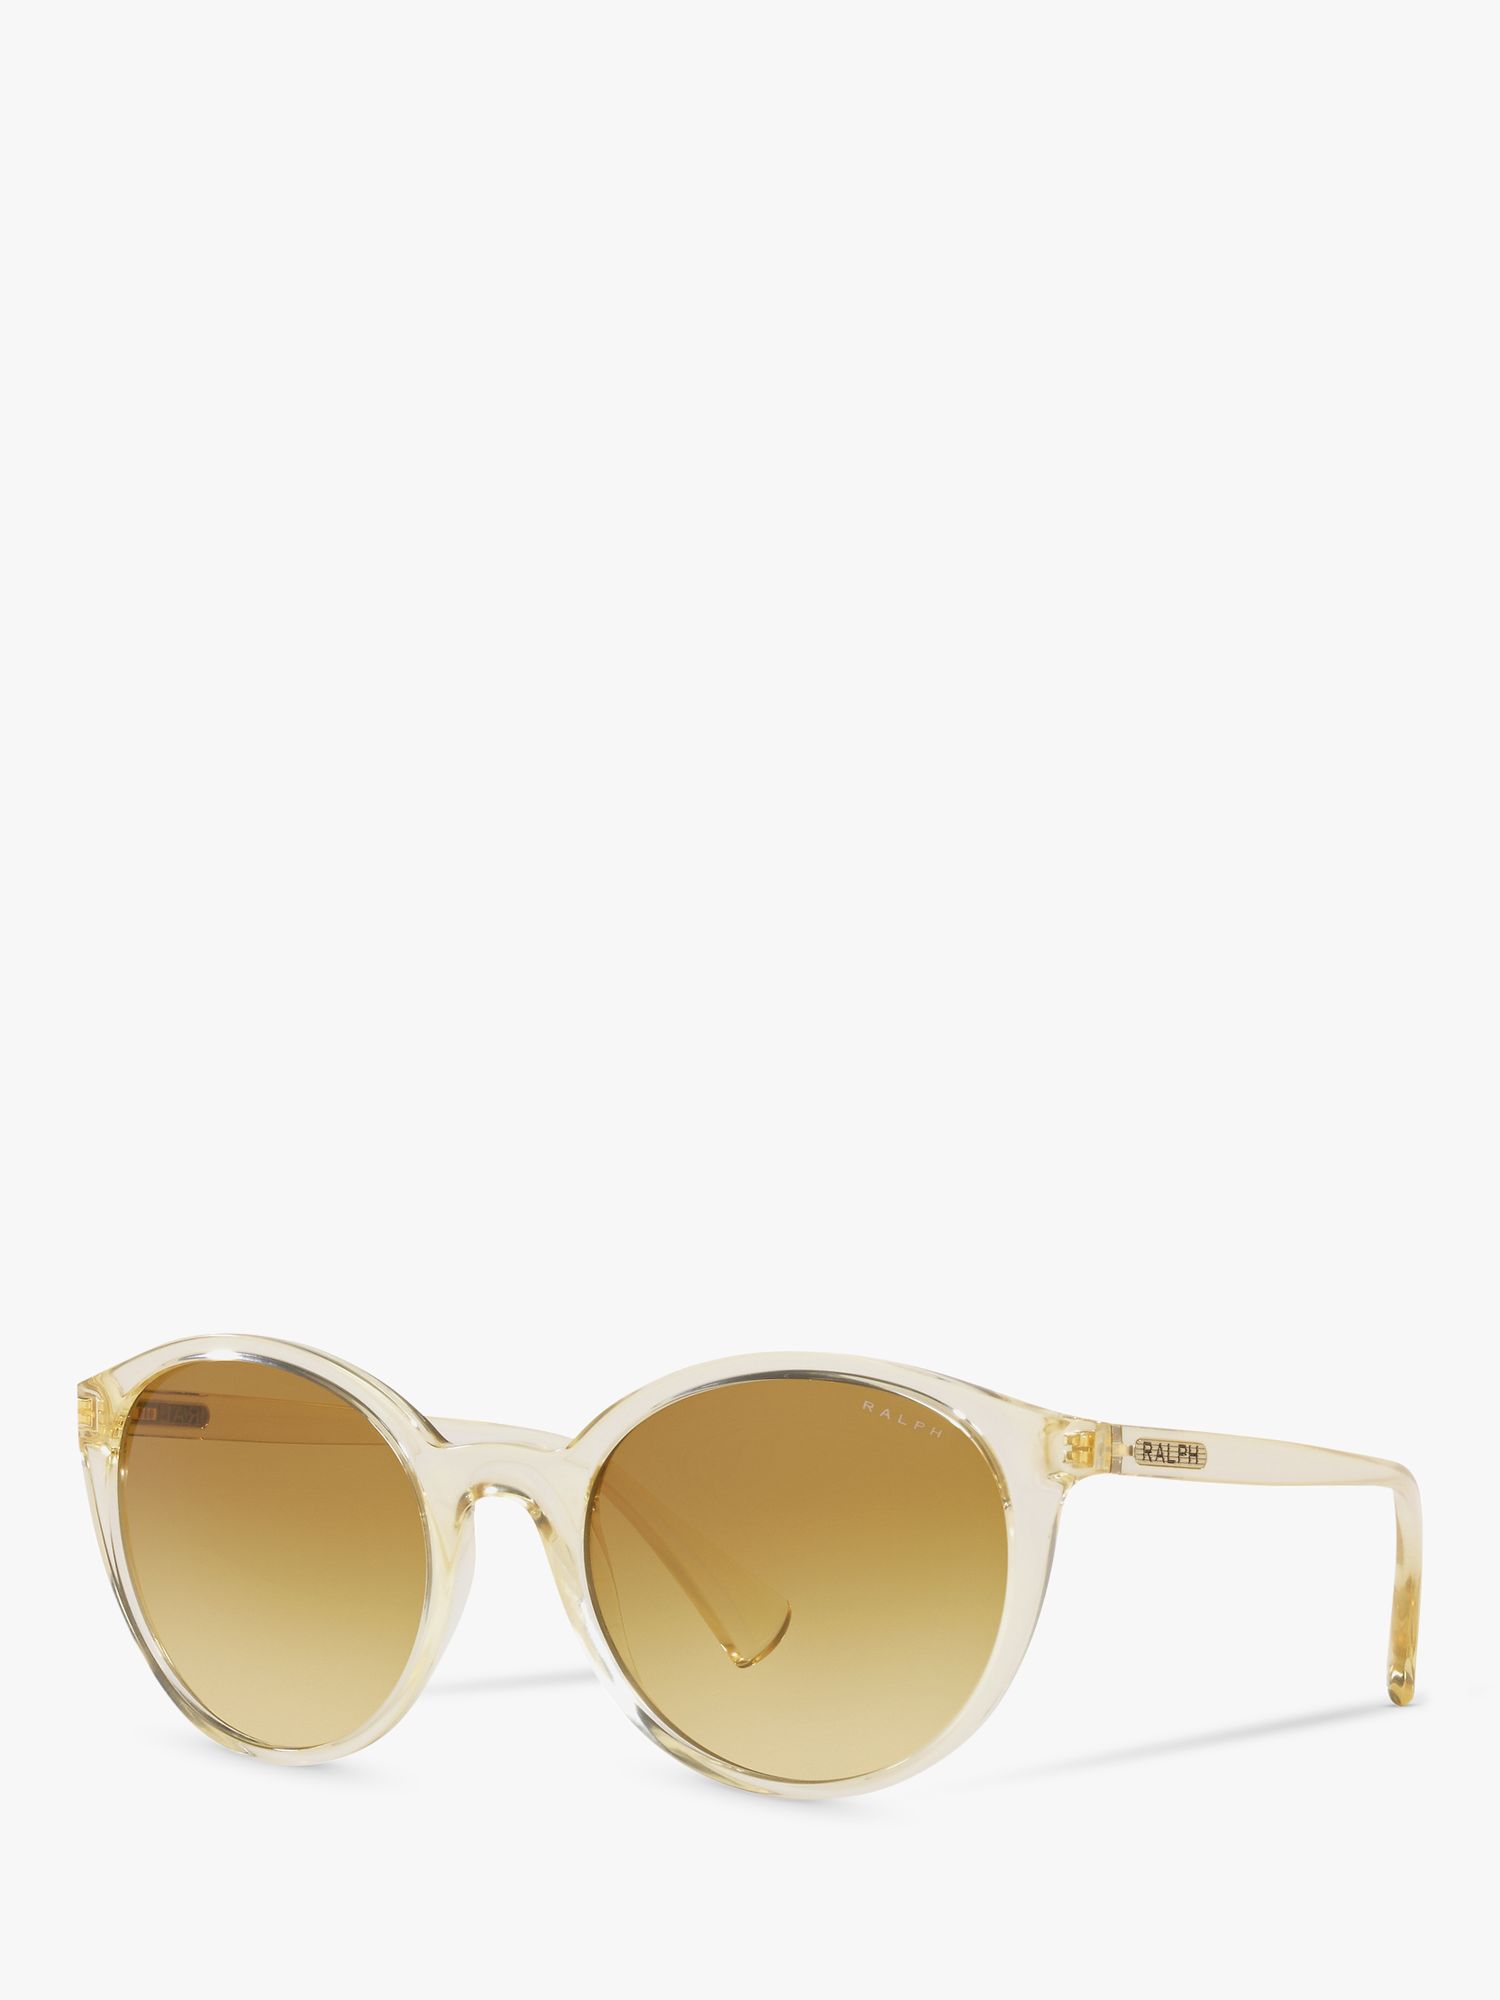 Women's Ralph Lauren Sunglasses | John Lewis & Partners